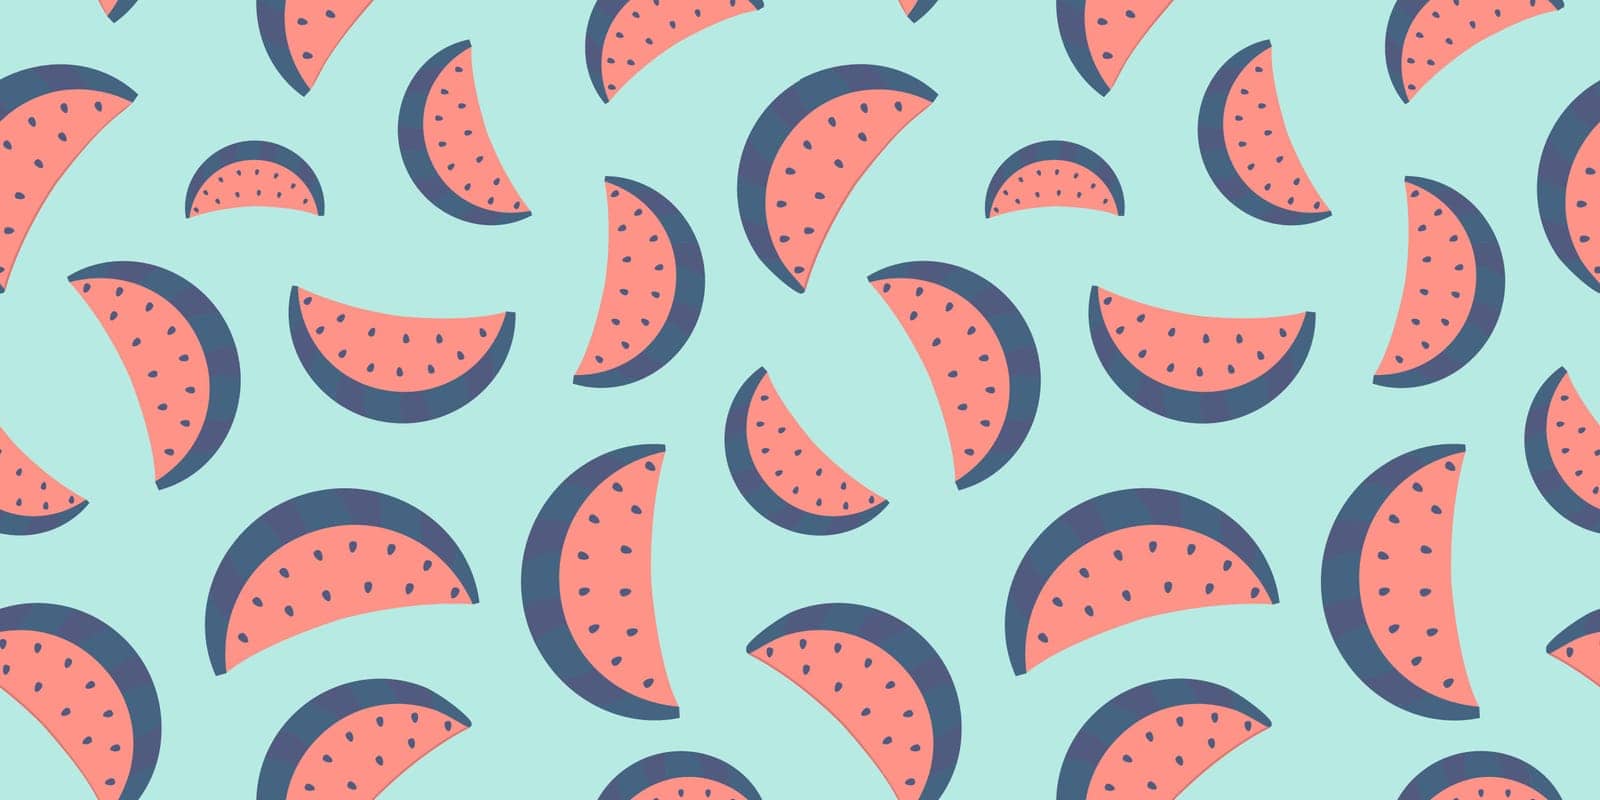 pattern of watermelon slices. summer fruit pattern by Dustick